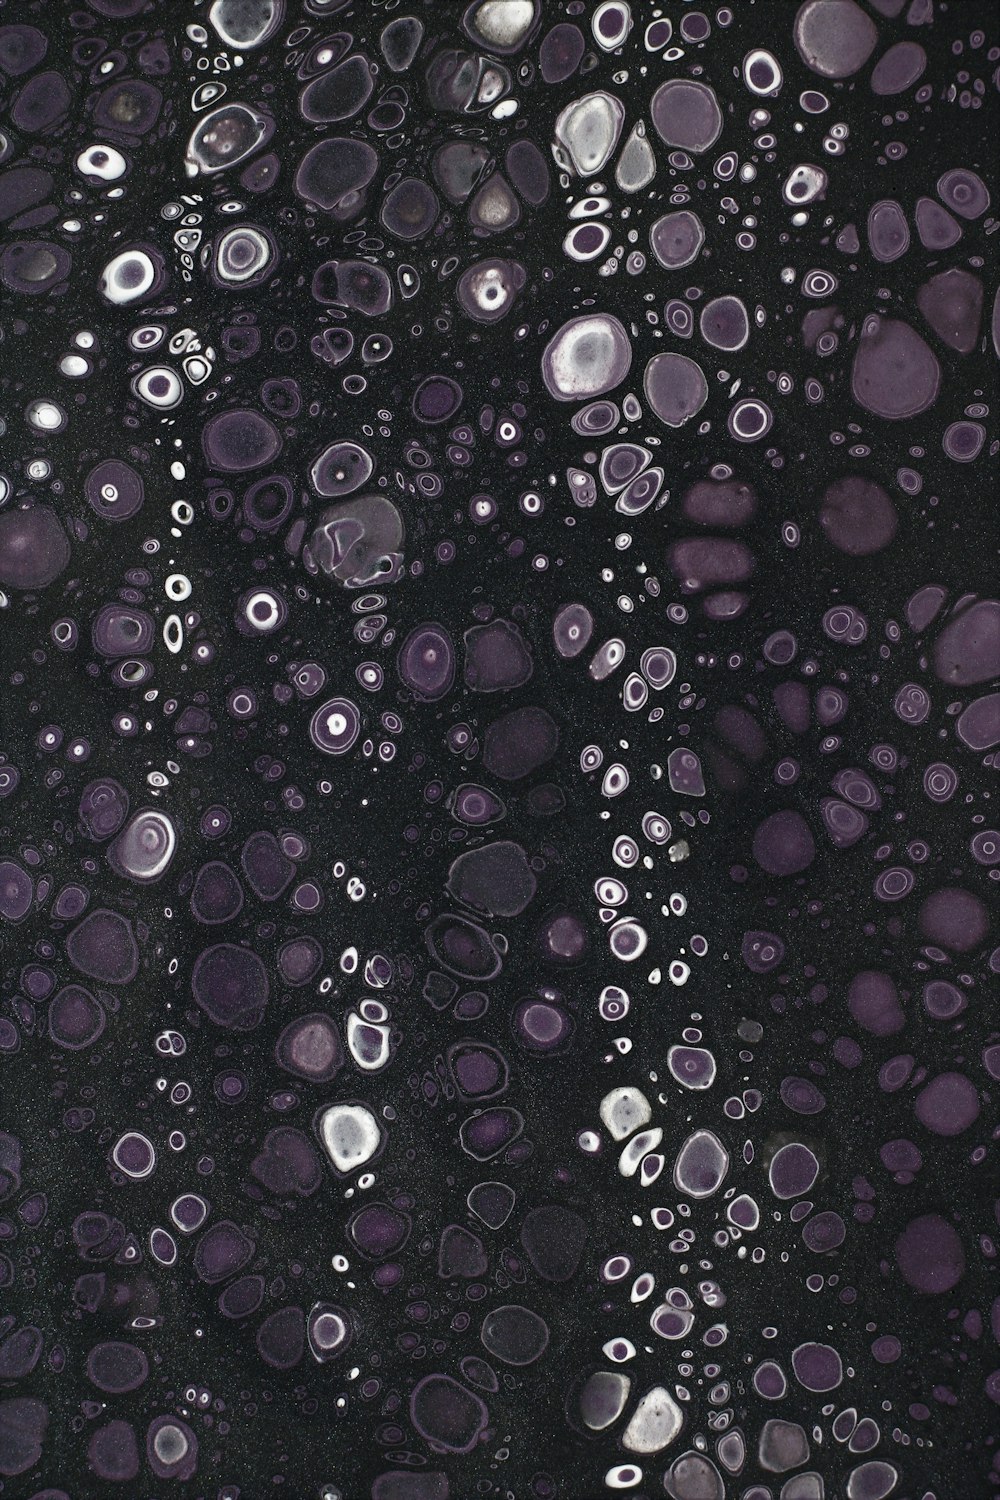 Un primer plano de burbujas de agua sobre una superficie negra